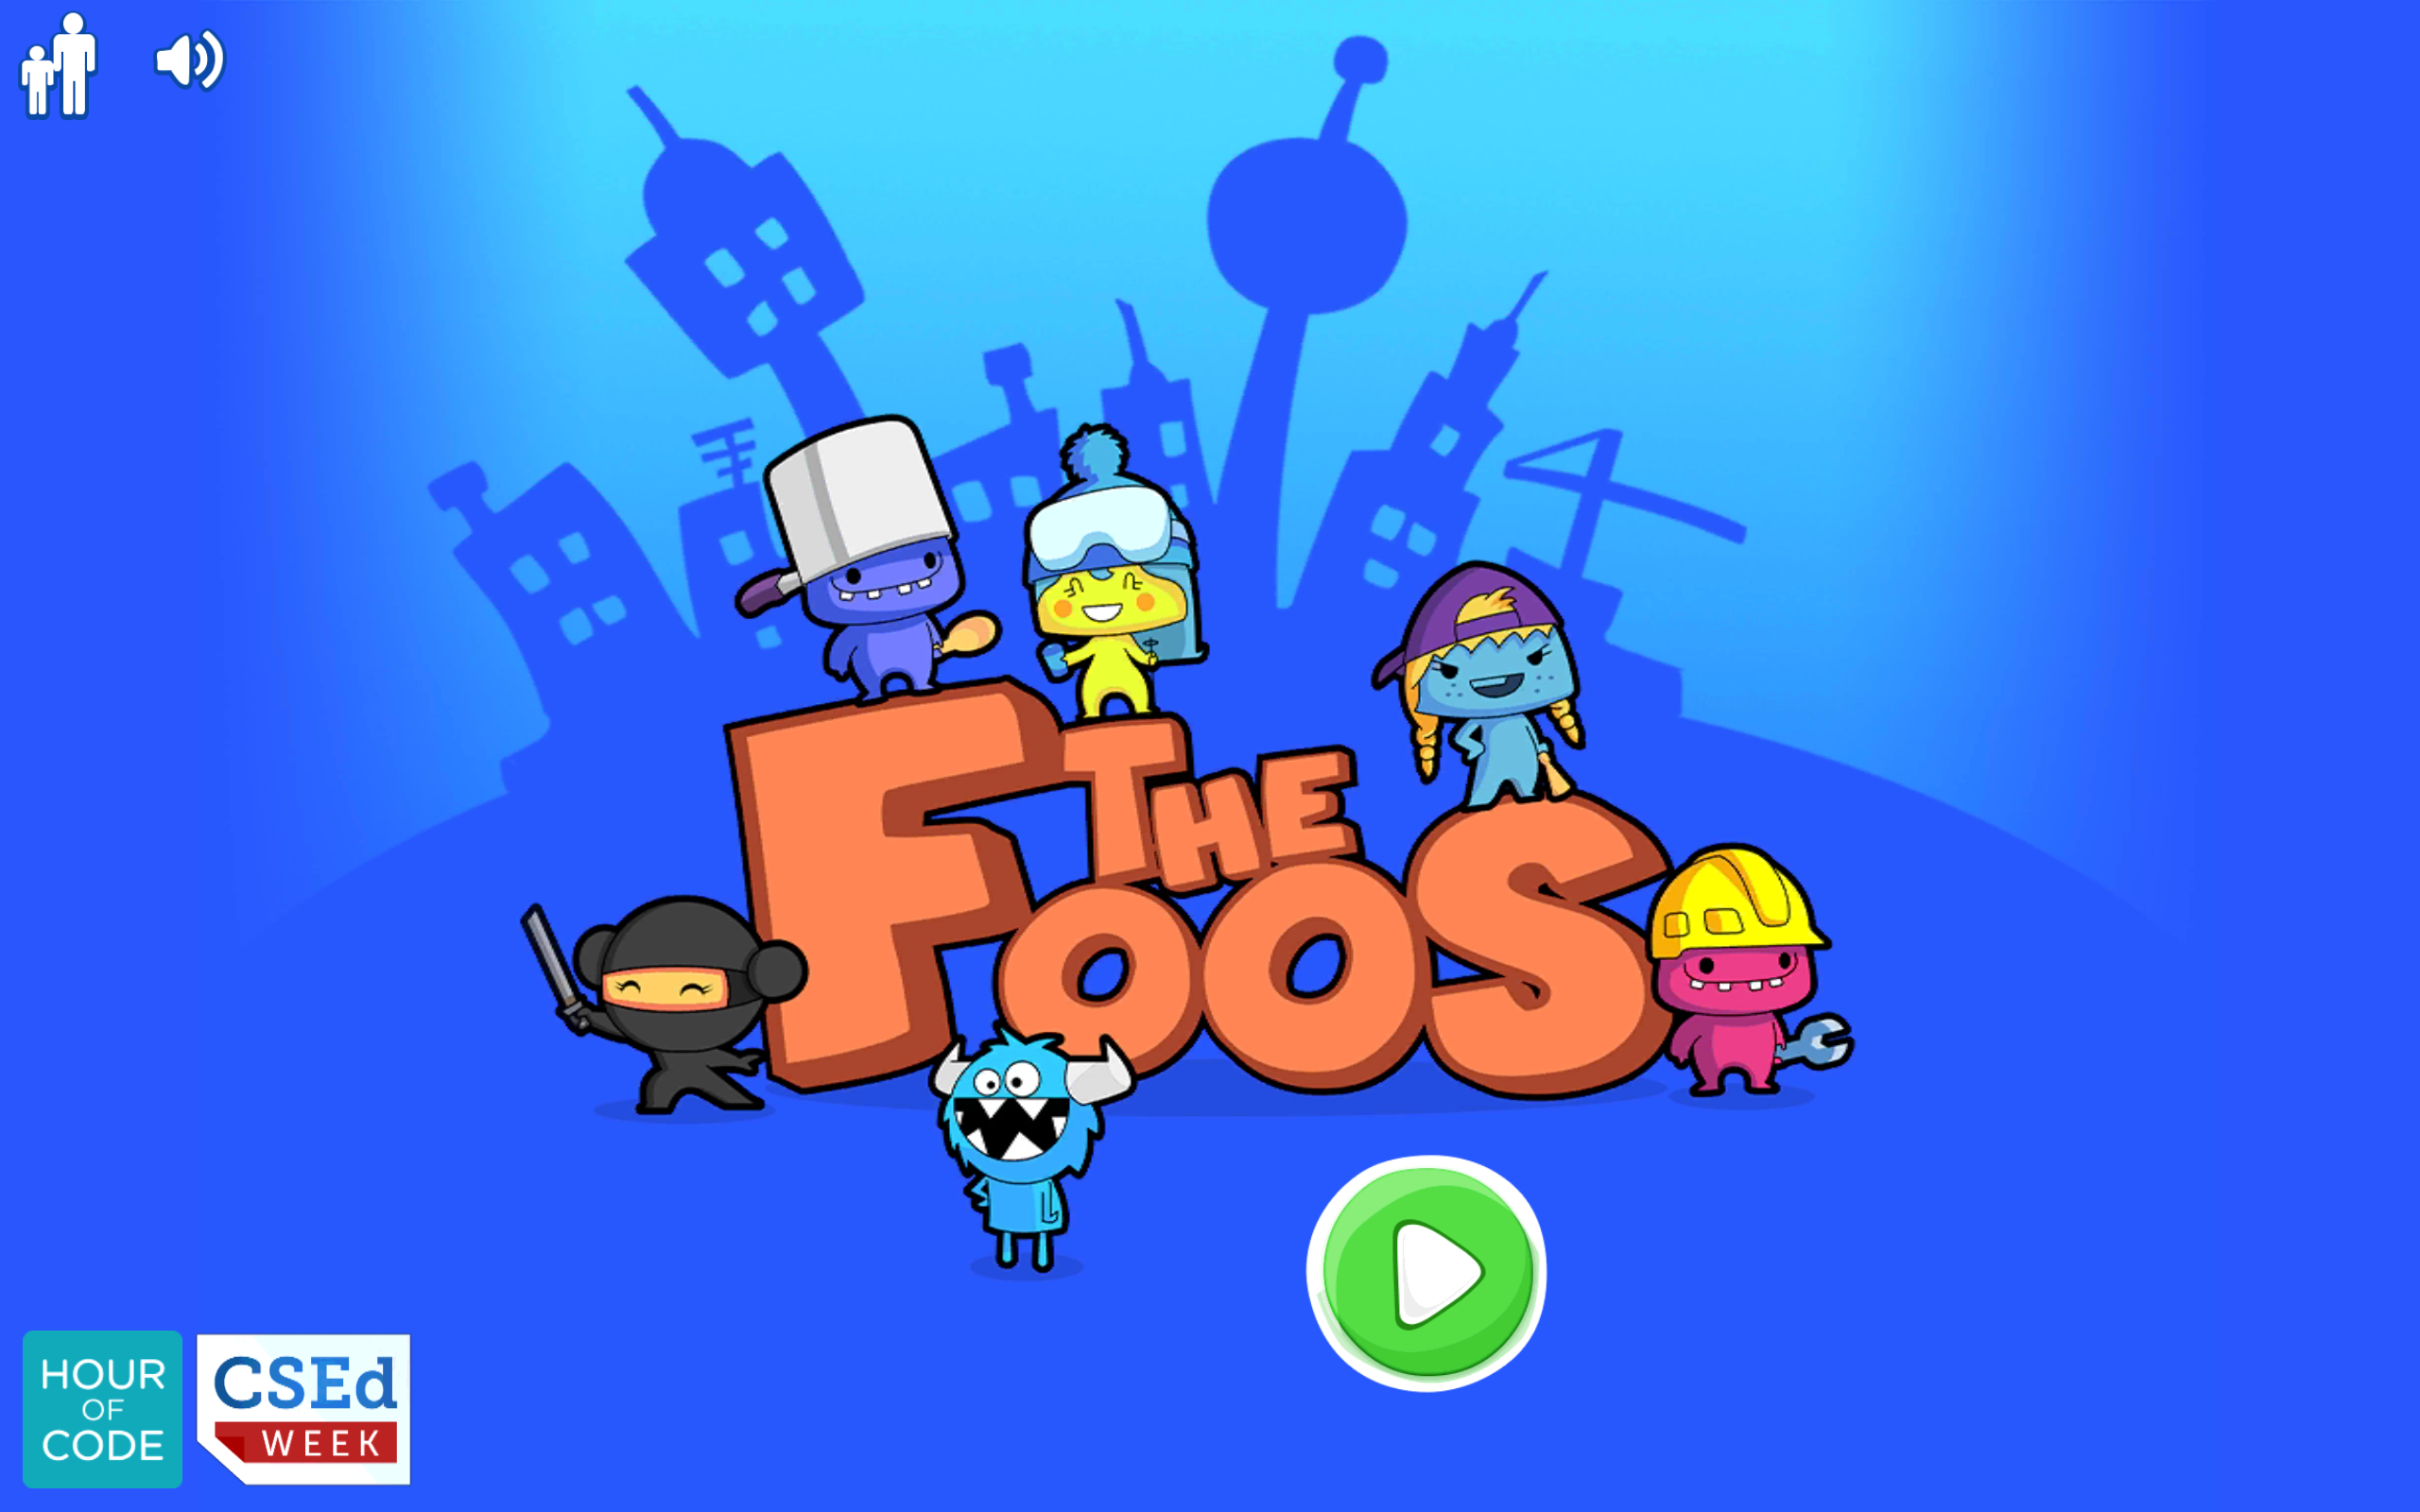 TheFoos screenshot